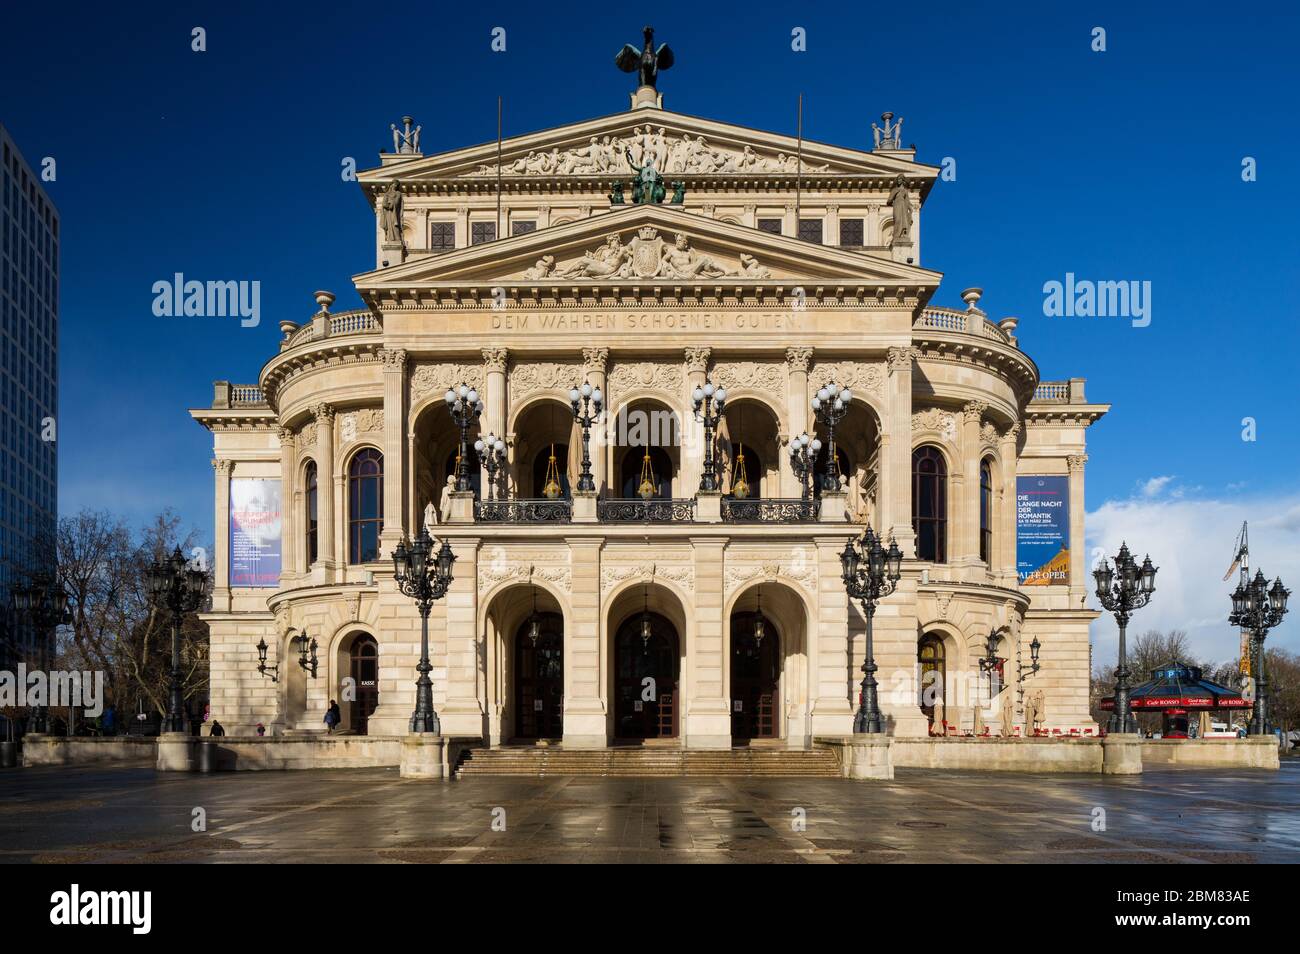 The Alte Oper, Frankfurt am Main, Hesse, Germany. The Alte Oper (Old Opera House) is the original opera house in Frankfurt and is now a concert hall. Stock Photo